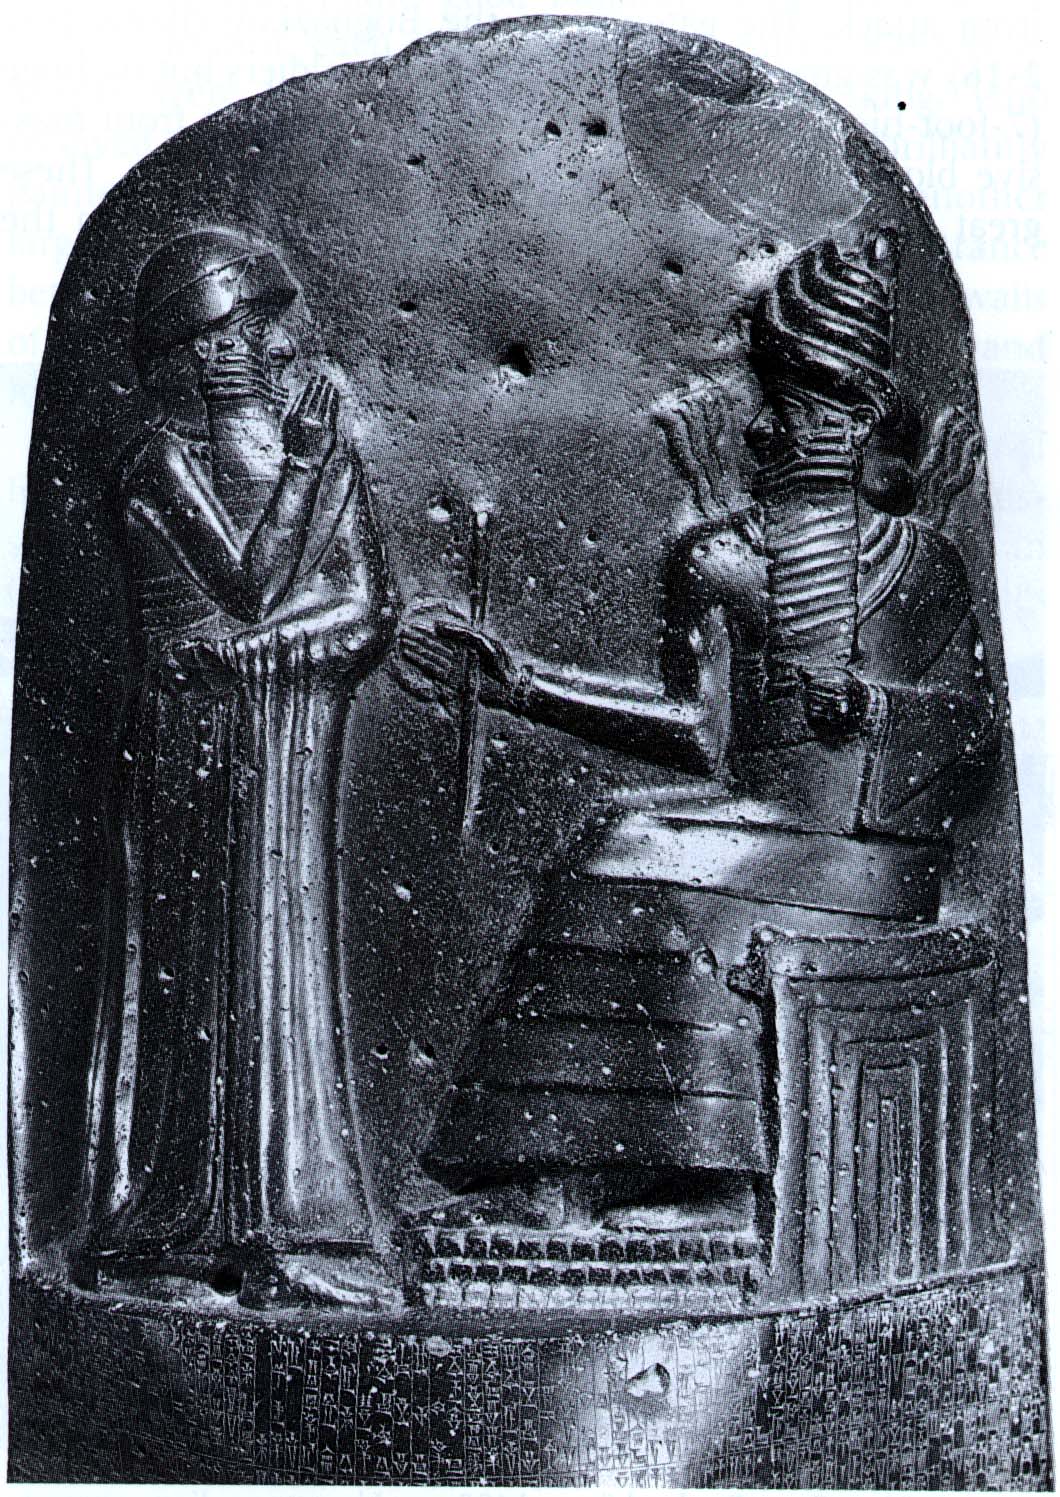 How did Babylonians learn the Hammurabi Code of Laws?